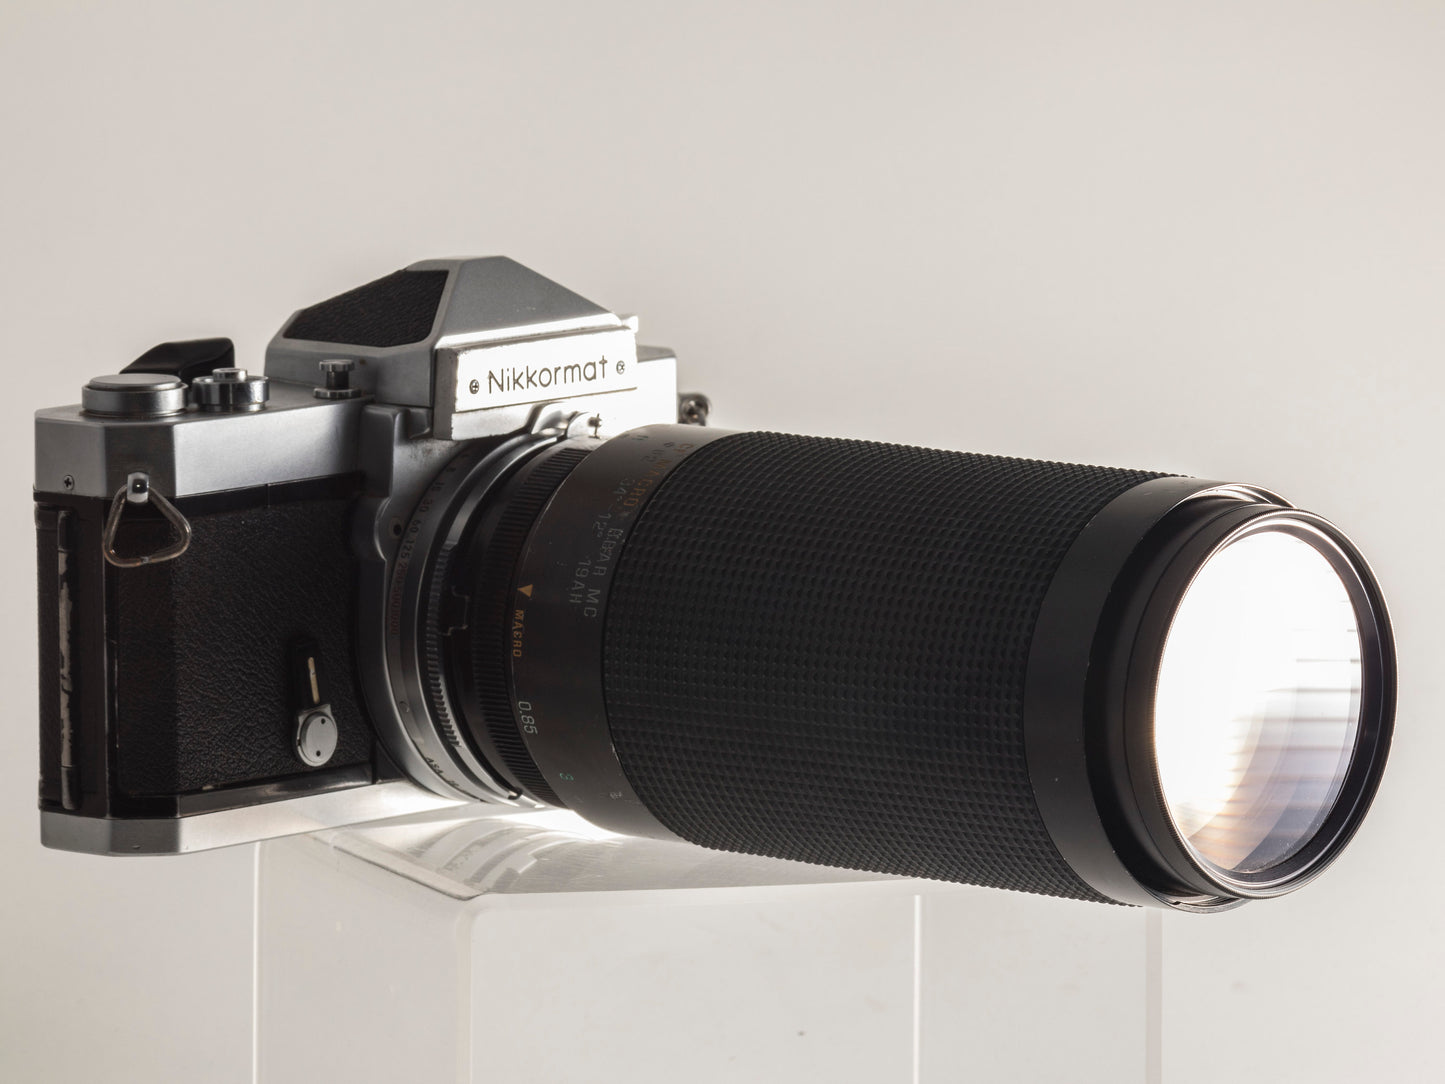 Nikon Nikkormat FTn 35mm film SLR